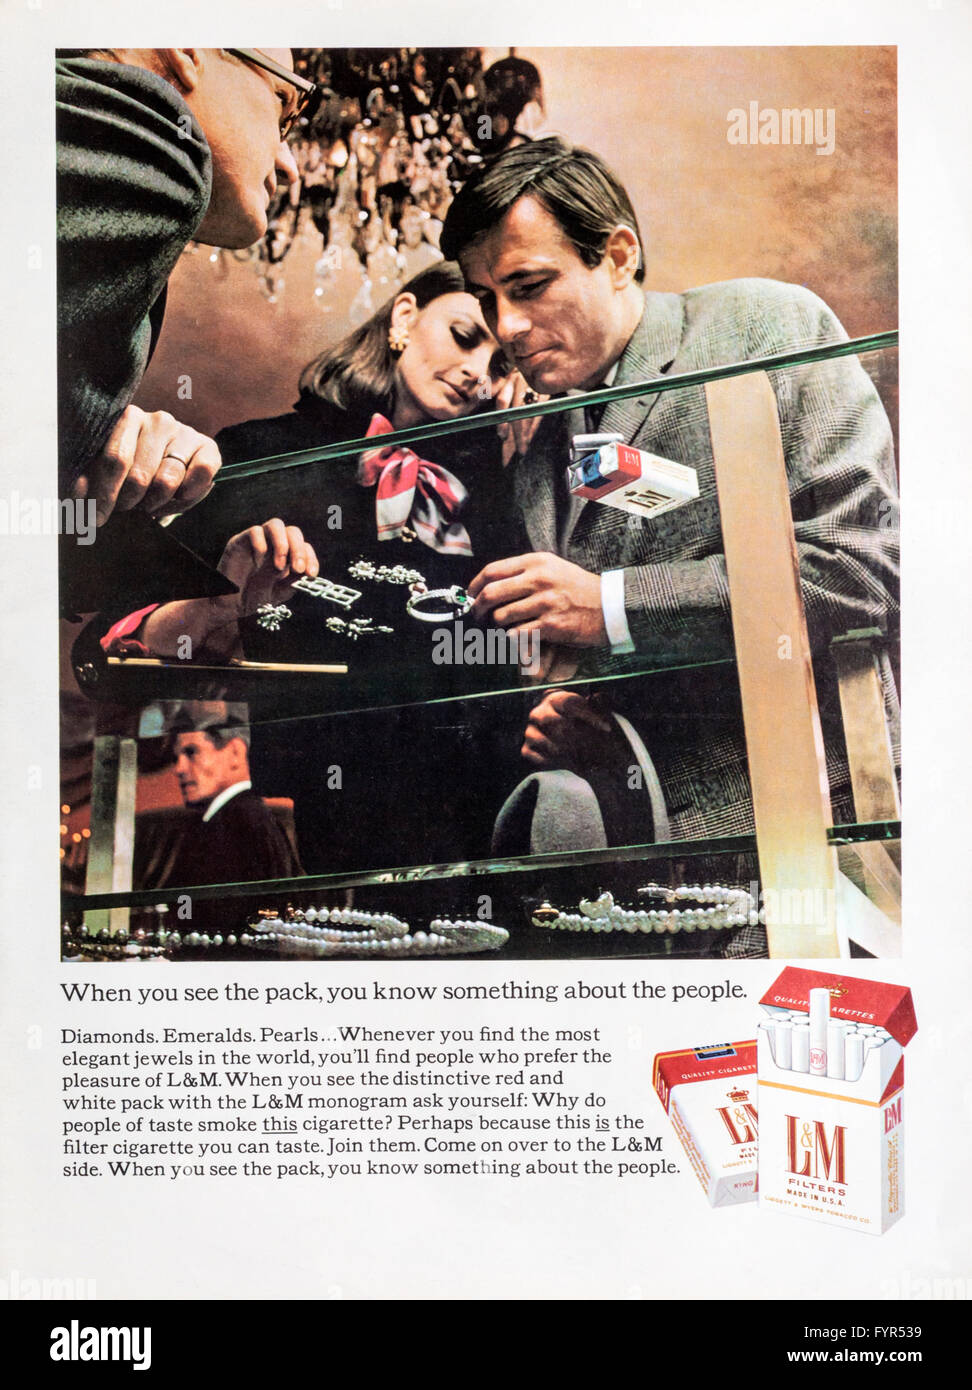 1960s magazine advertisement advertising L&M cigarettes. Stock Photo